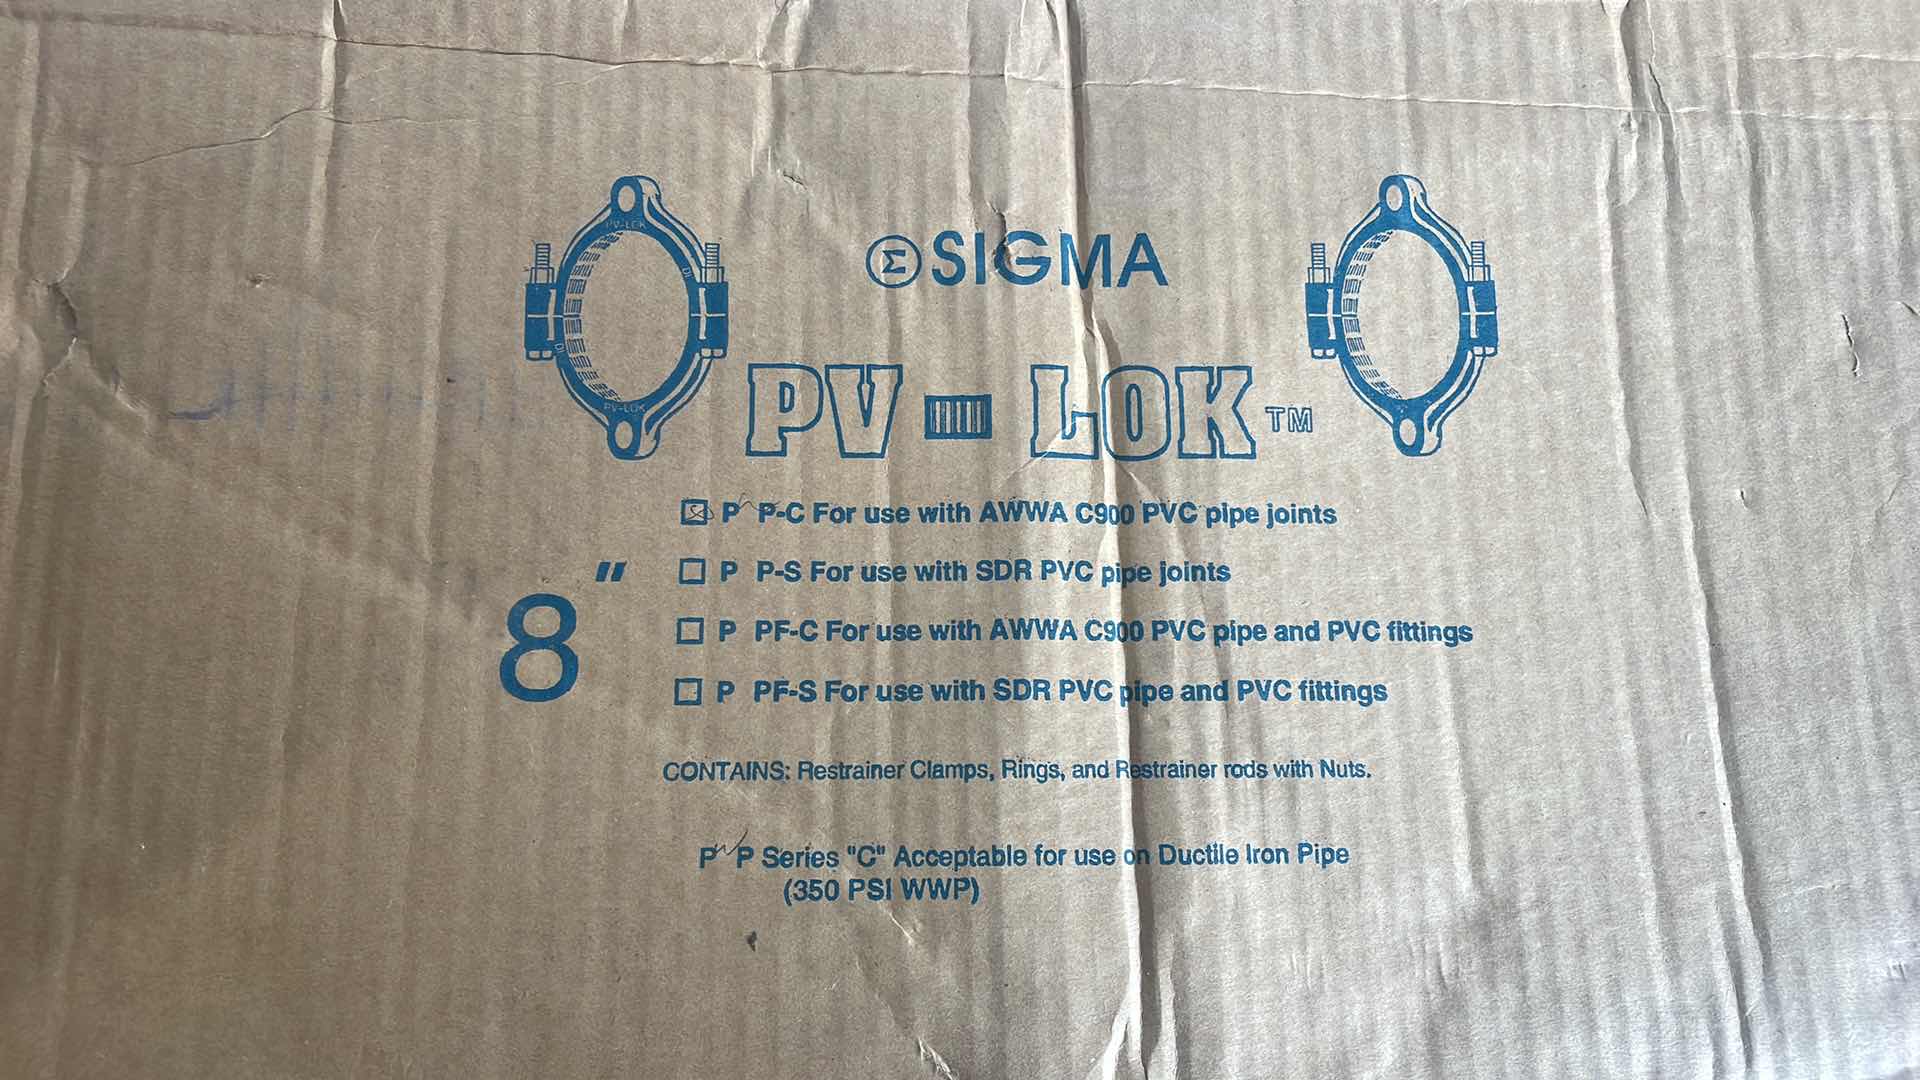 Photo 2 of PWP-C8 SIGMA PV-LOK 8 PVC/DUCTILE IRON RESTRAINT